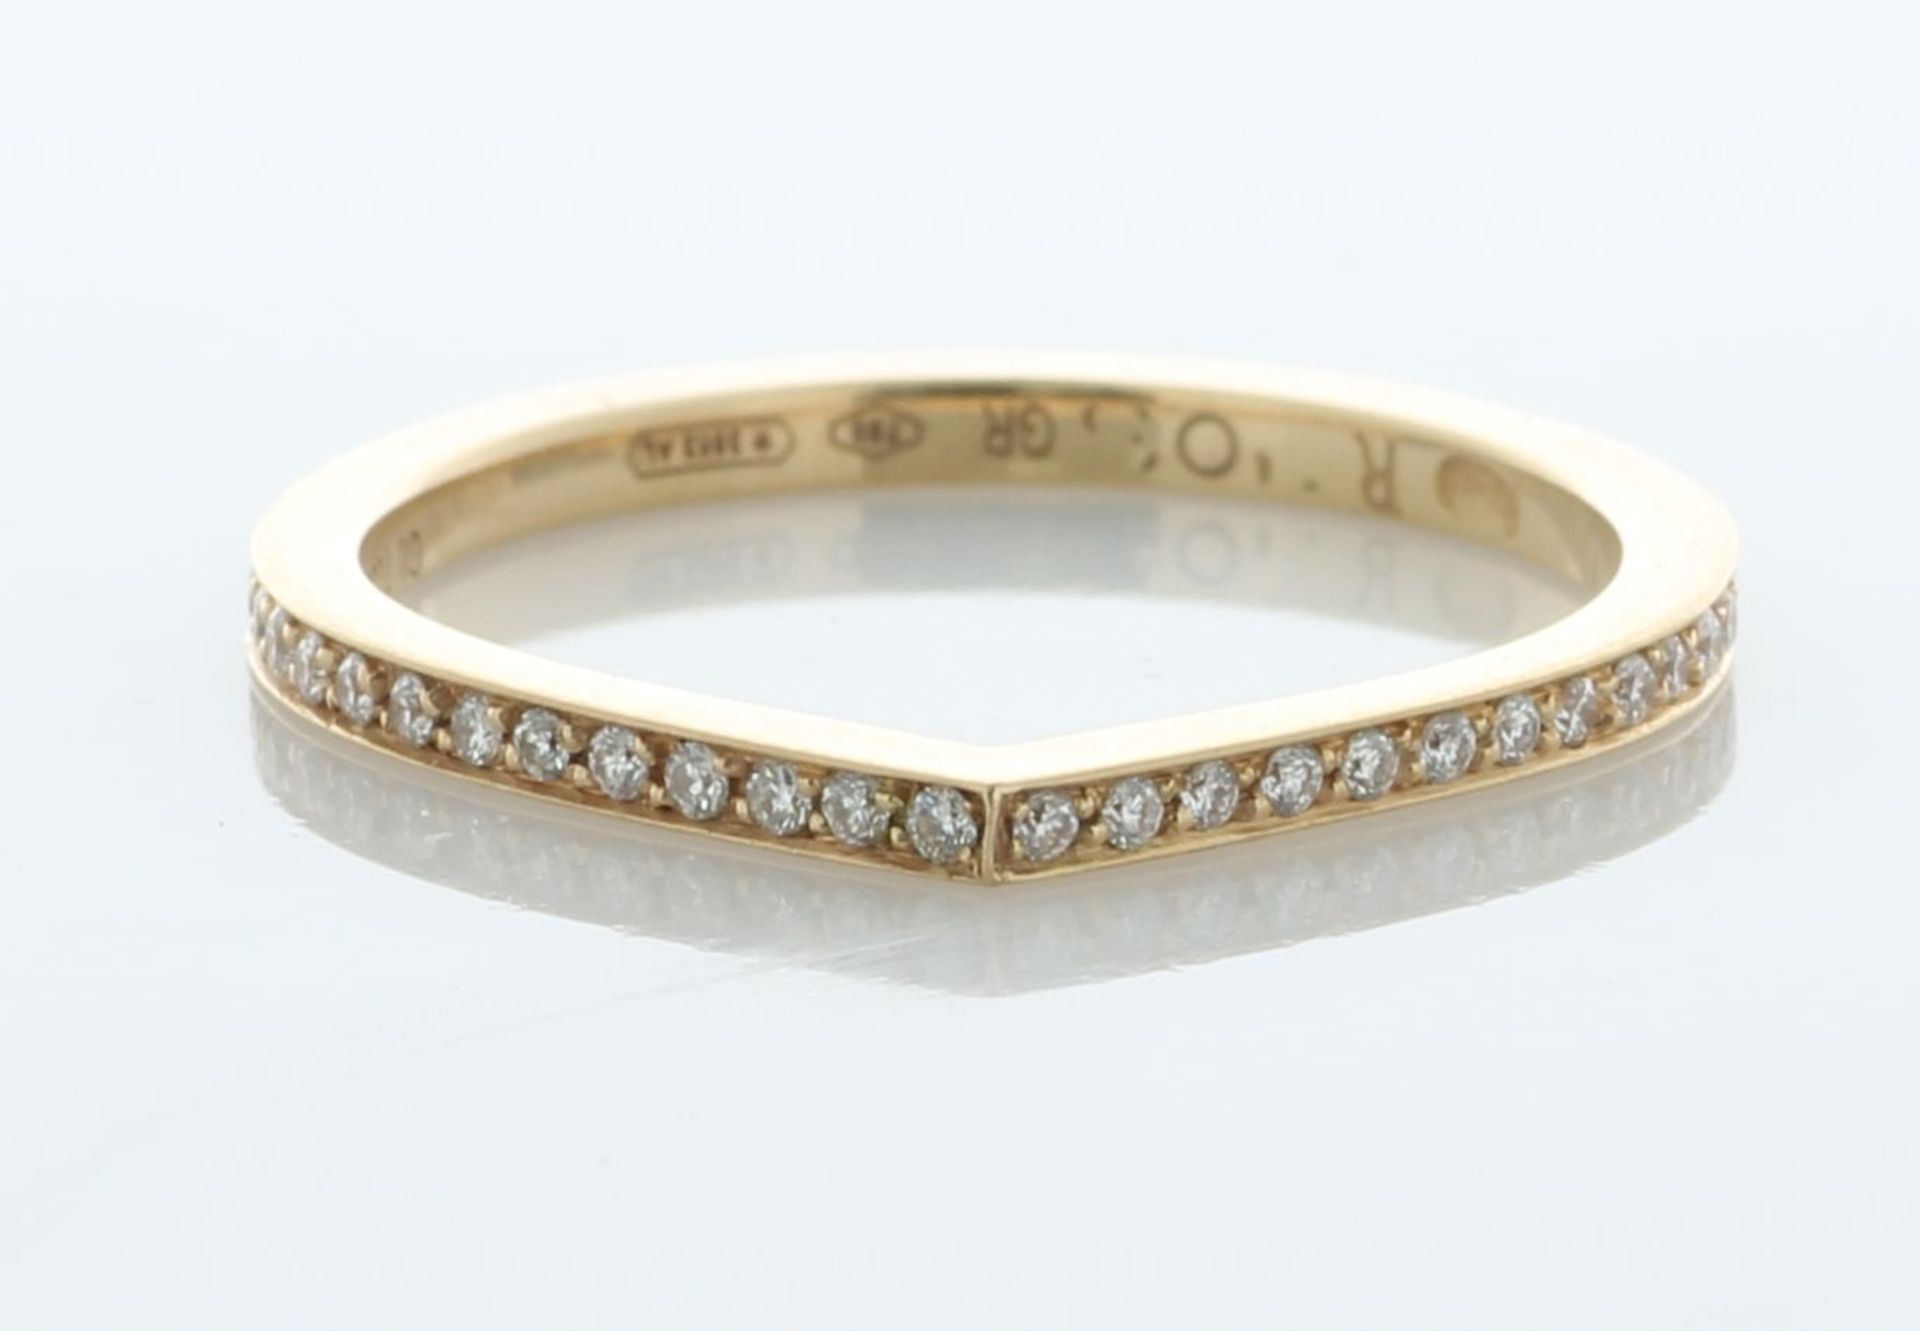 18ct Rose Gold Diamond Tear Shape Ring 0.50 Carats - Valued By AGI £3,000.00 - A full set eternity